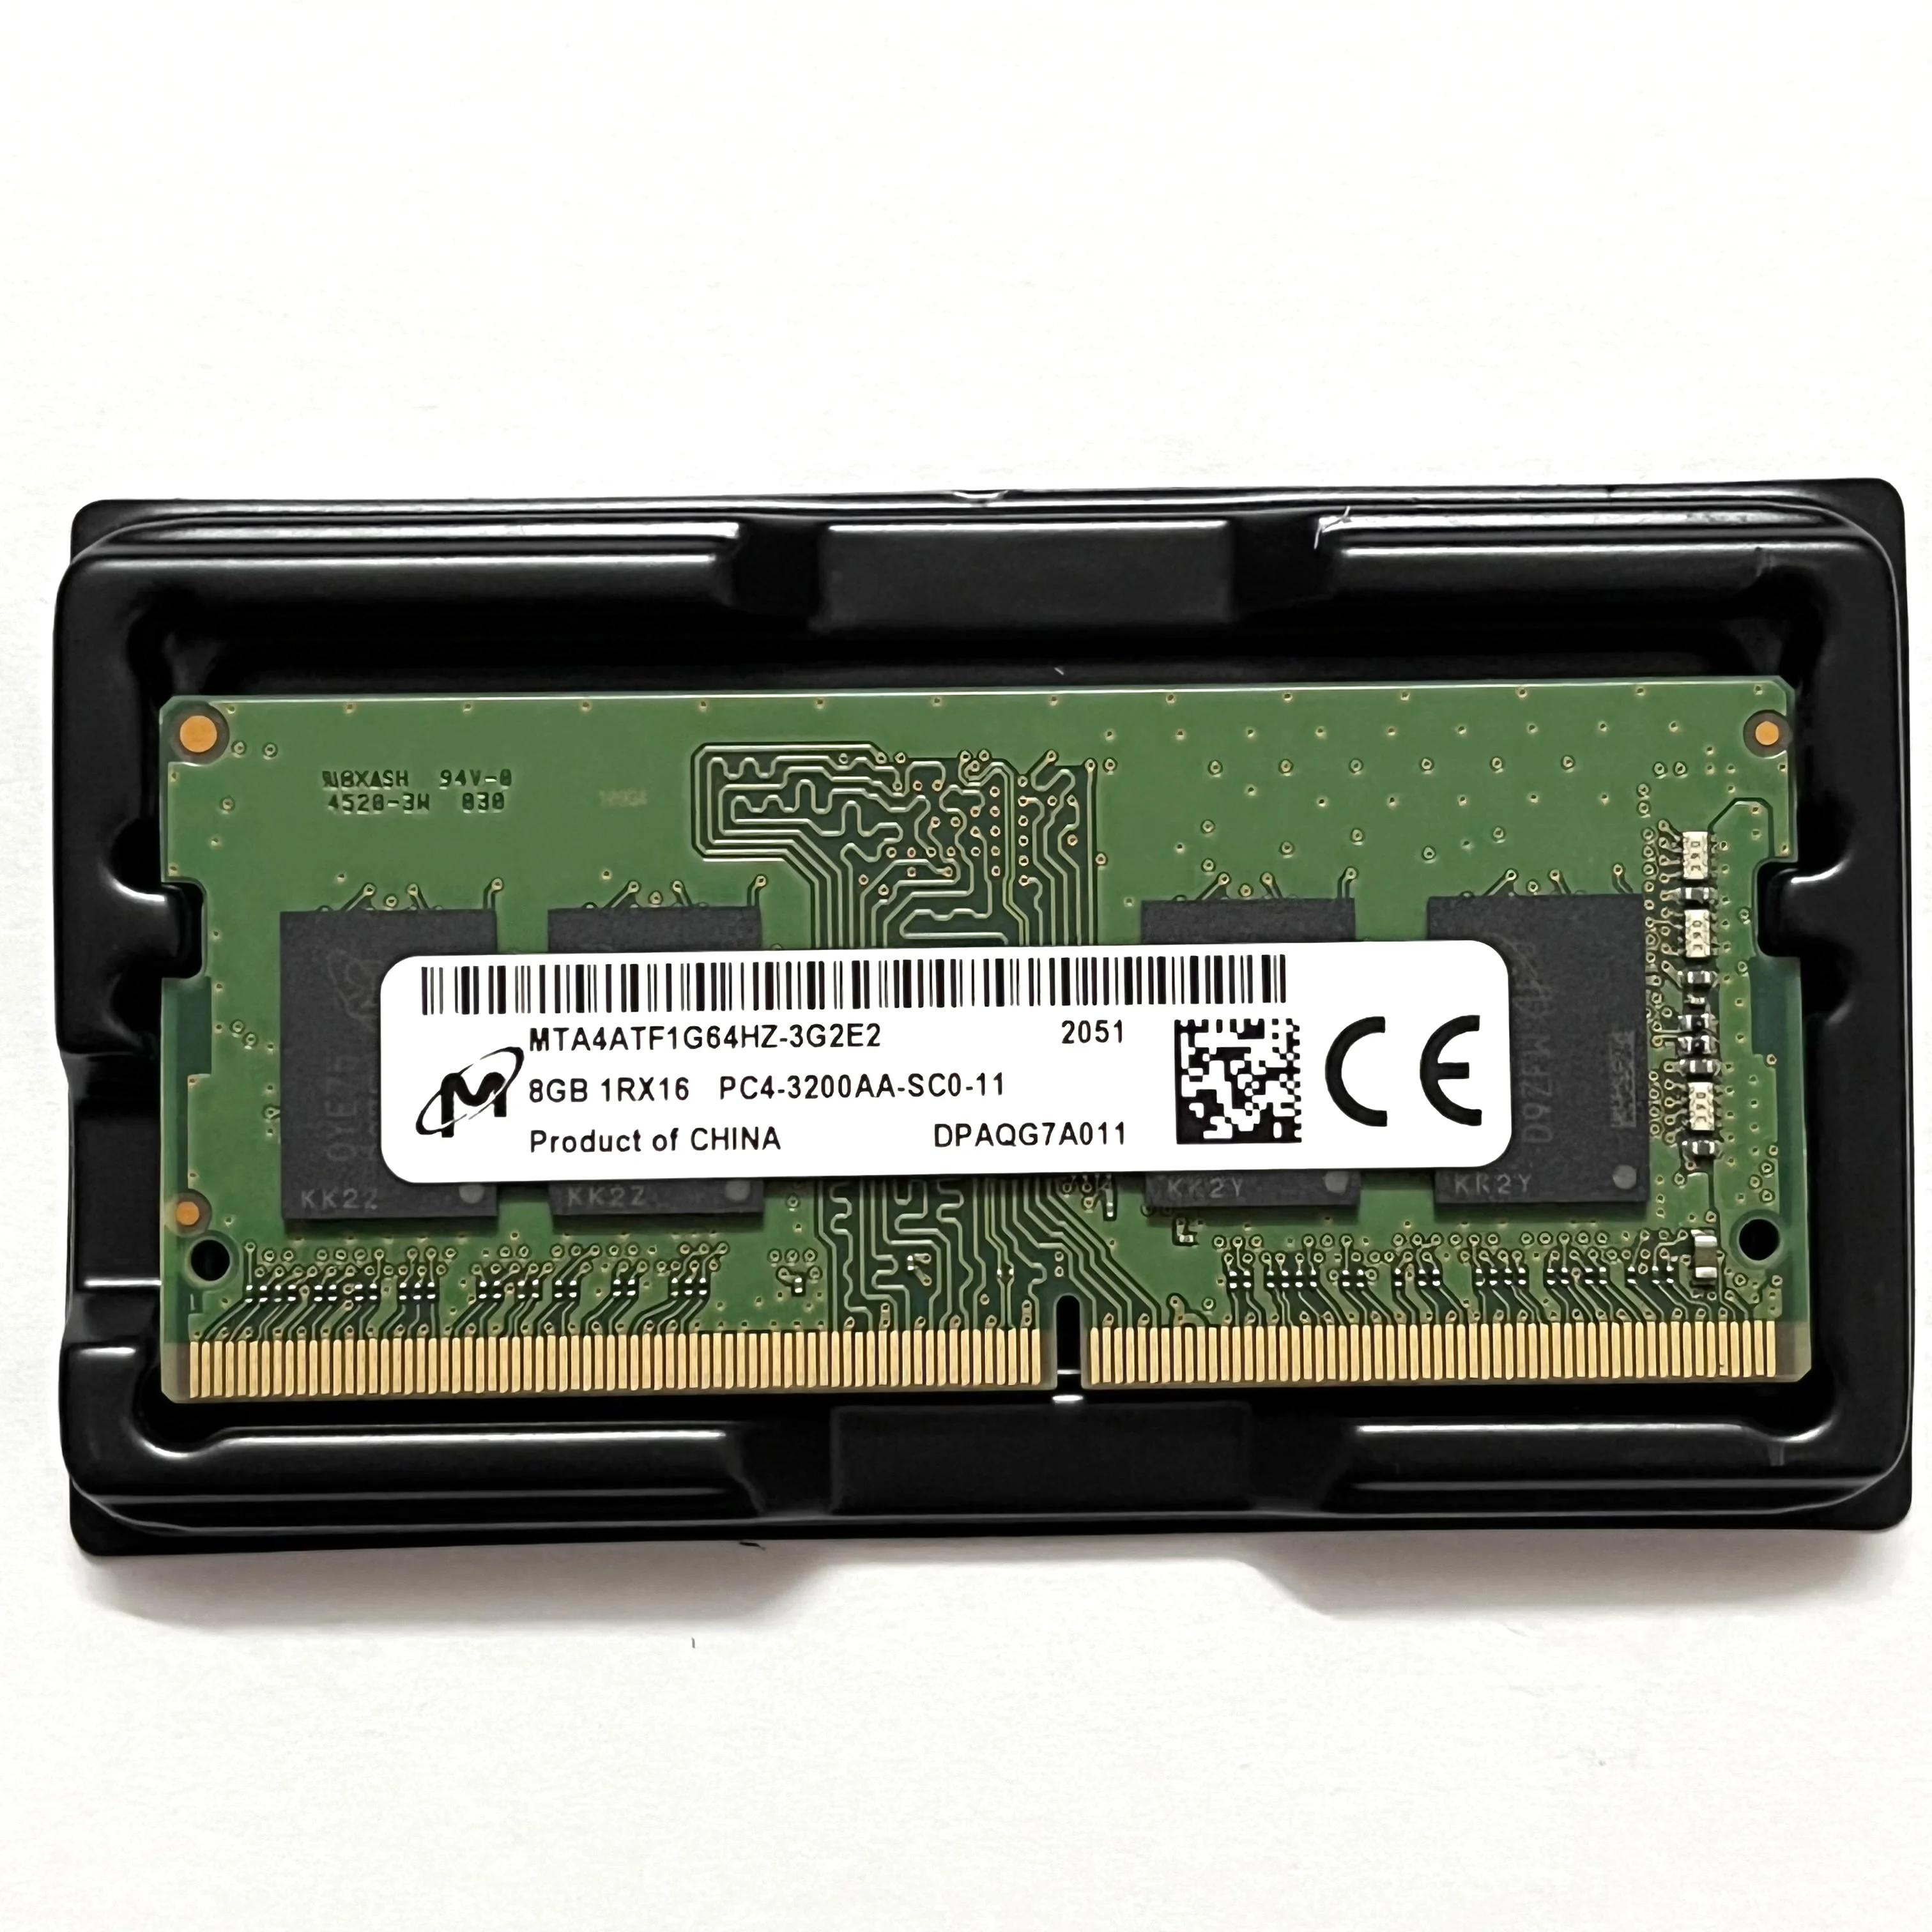 Micron DDR4 8GB 3200 Laptop Memory MTA4ATF1G64HZ 8GB 1RX16  PC4-3200AA-SC0-11 DDR4 RAMS 8GB 3200